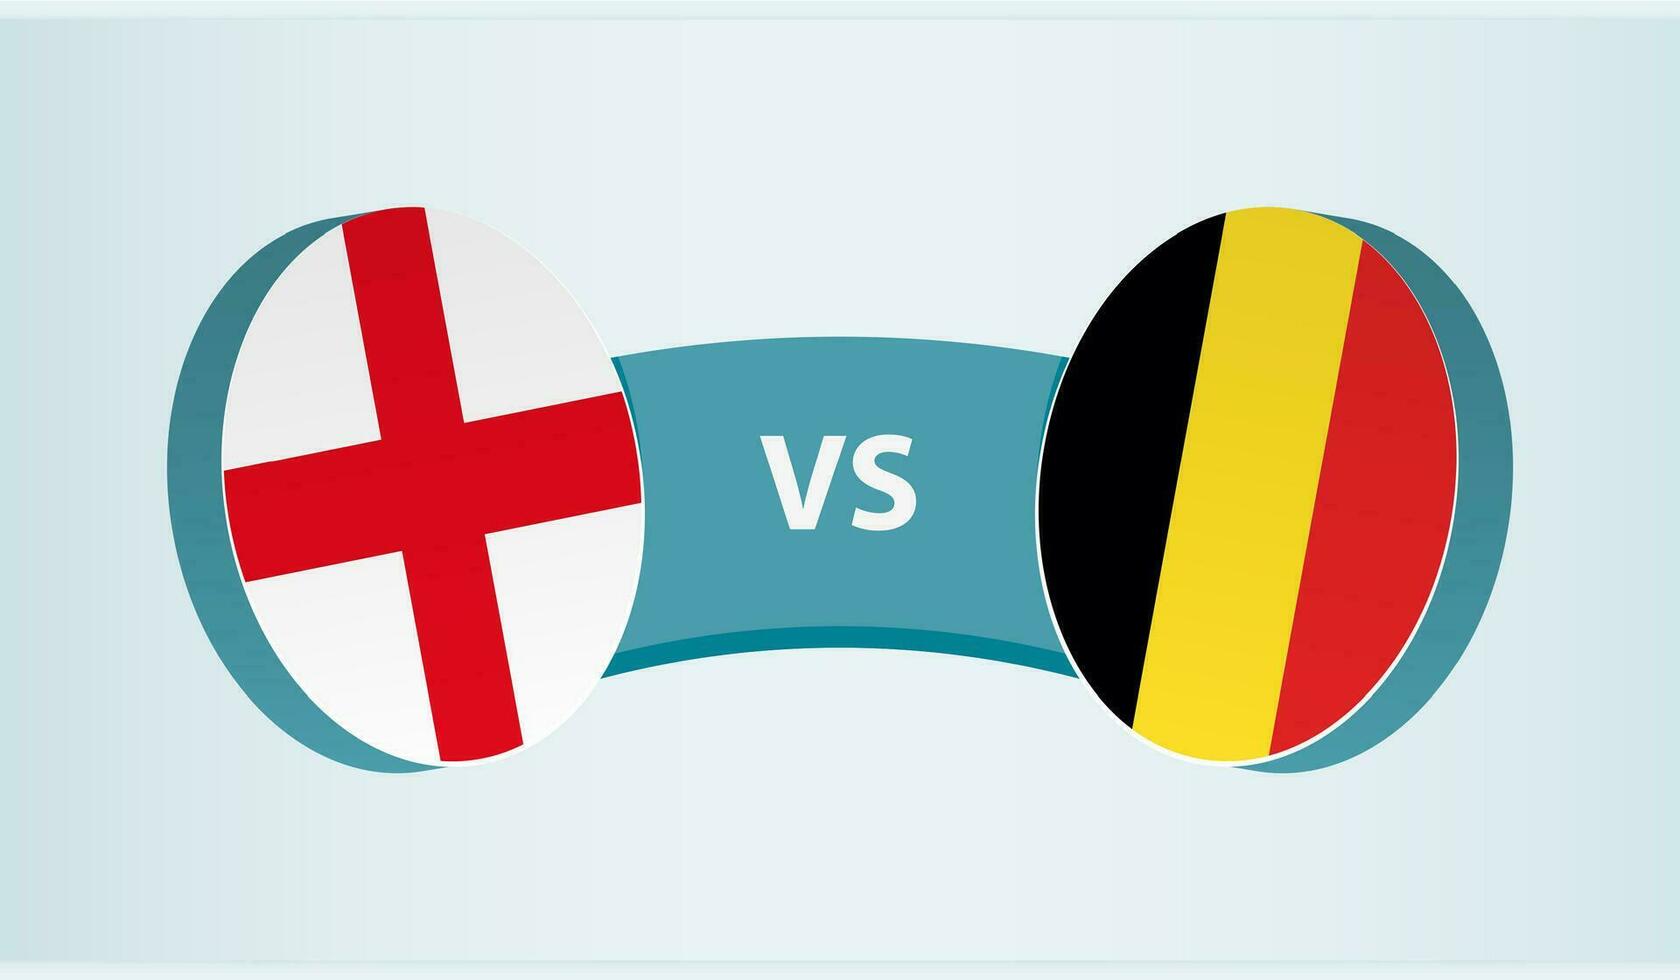 Inglaterra versus Bélgica, equipe Esportes concorrência conceito. vetor